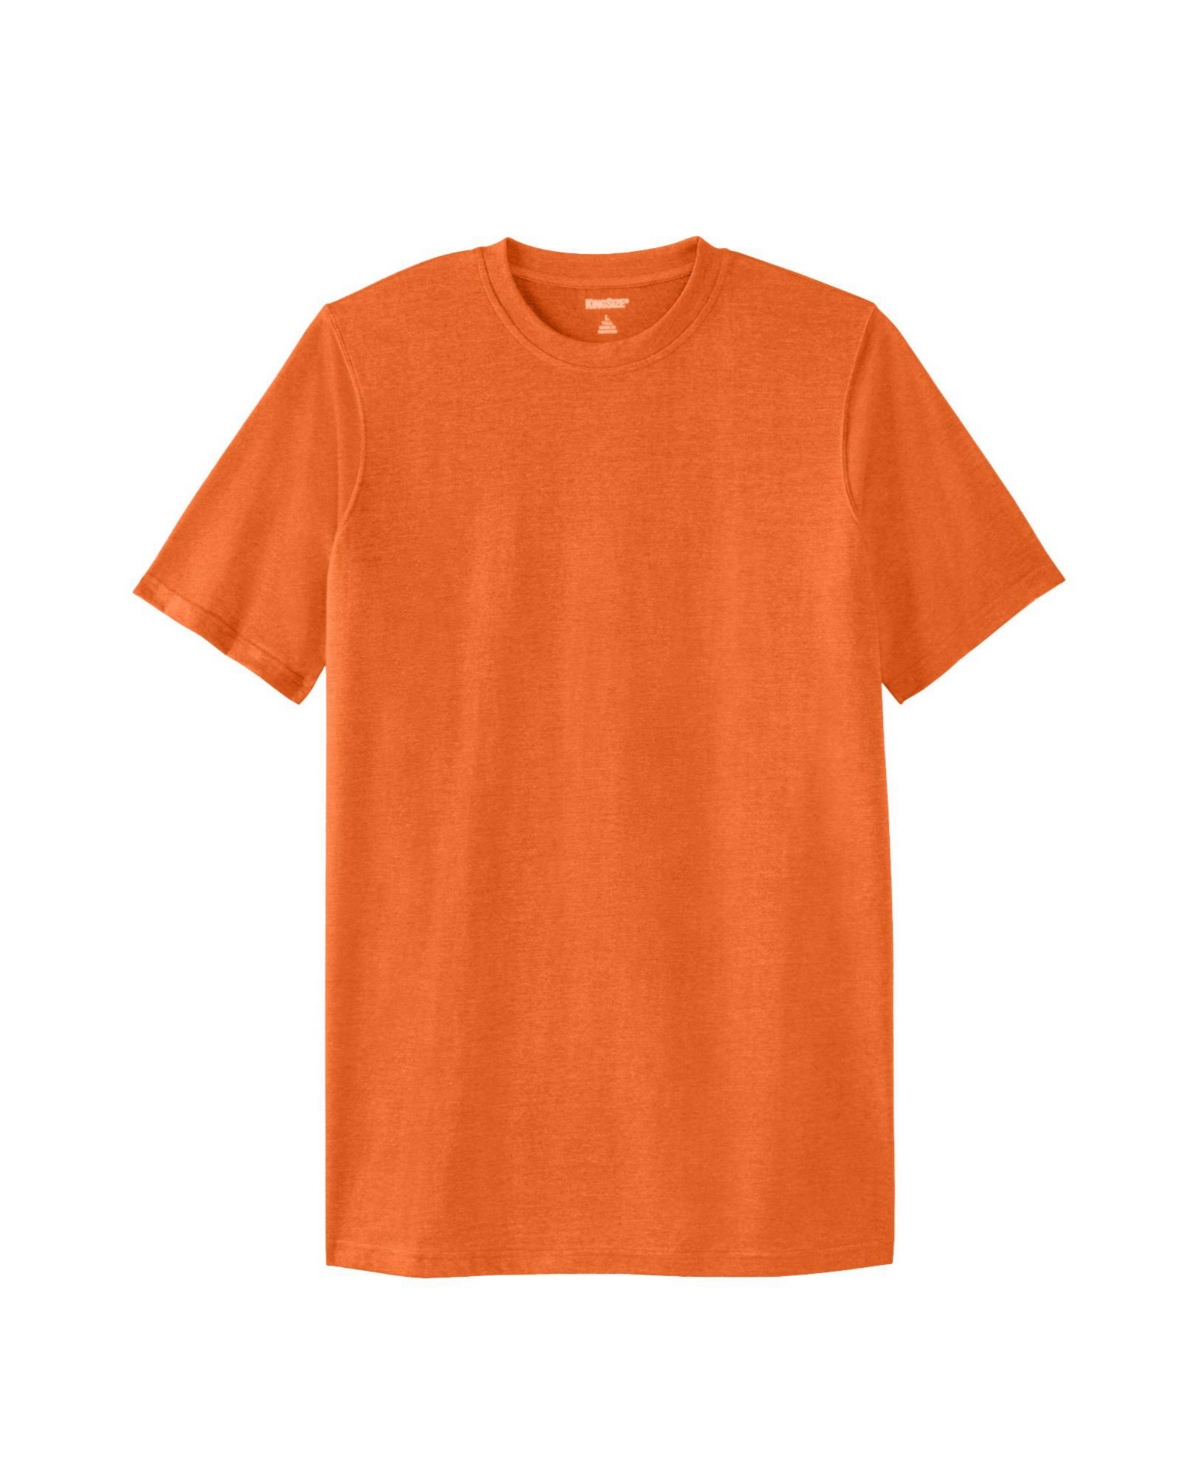 Big & Tall Shrink-Less Lightweight Longer-Length Crewneck T-Shirt - Heather orange